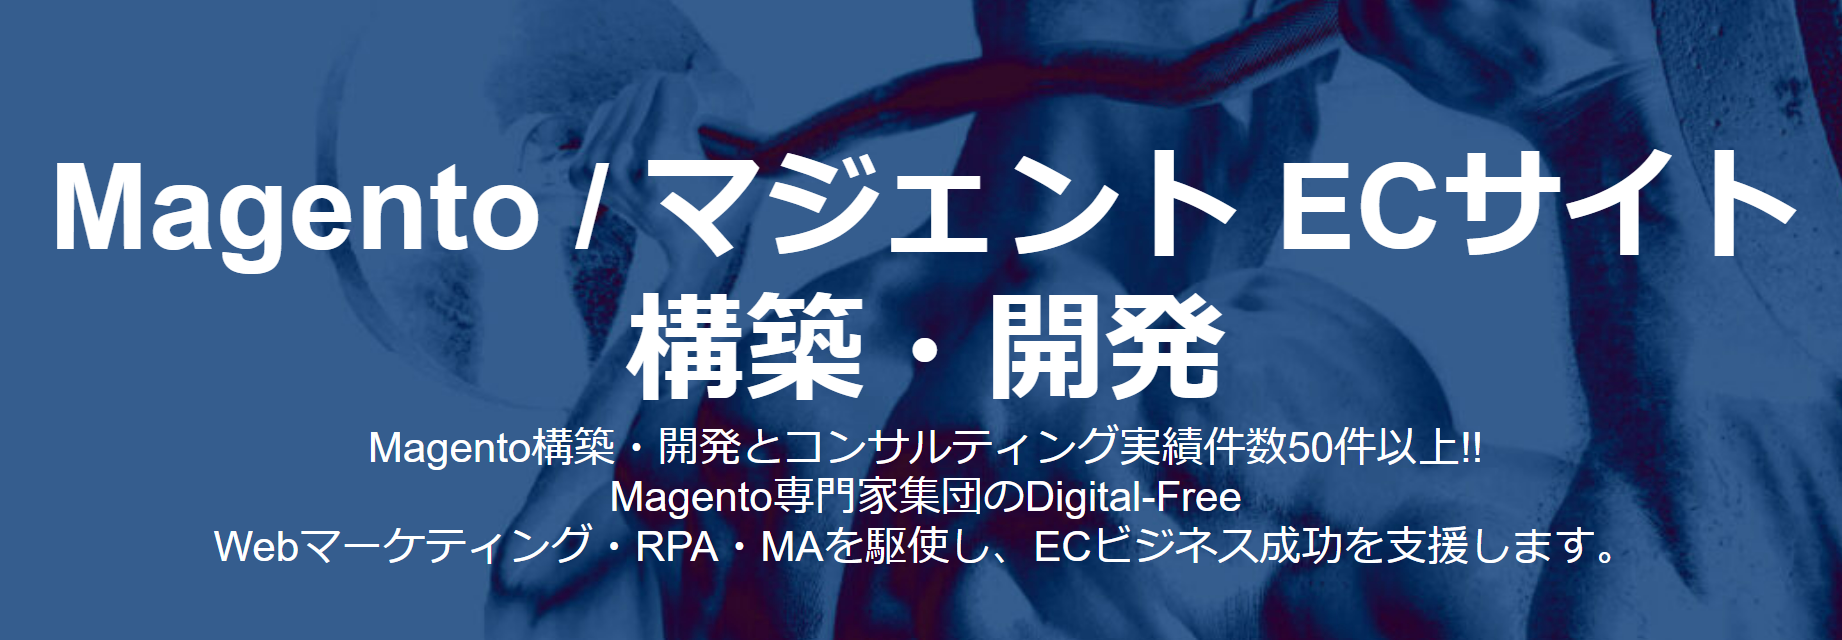 Digital-Free株式会社